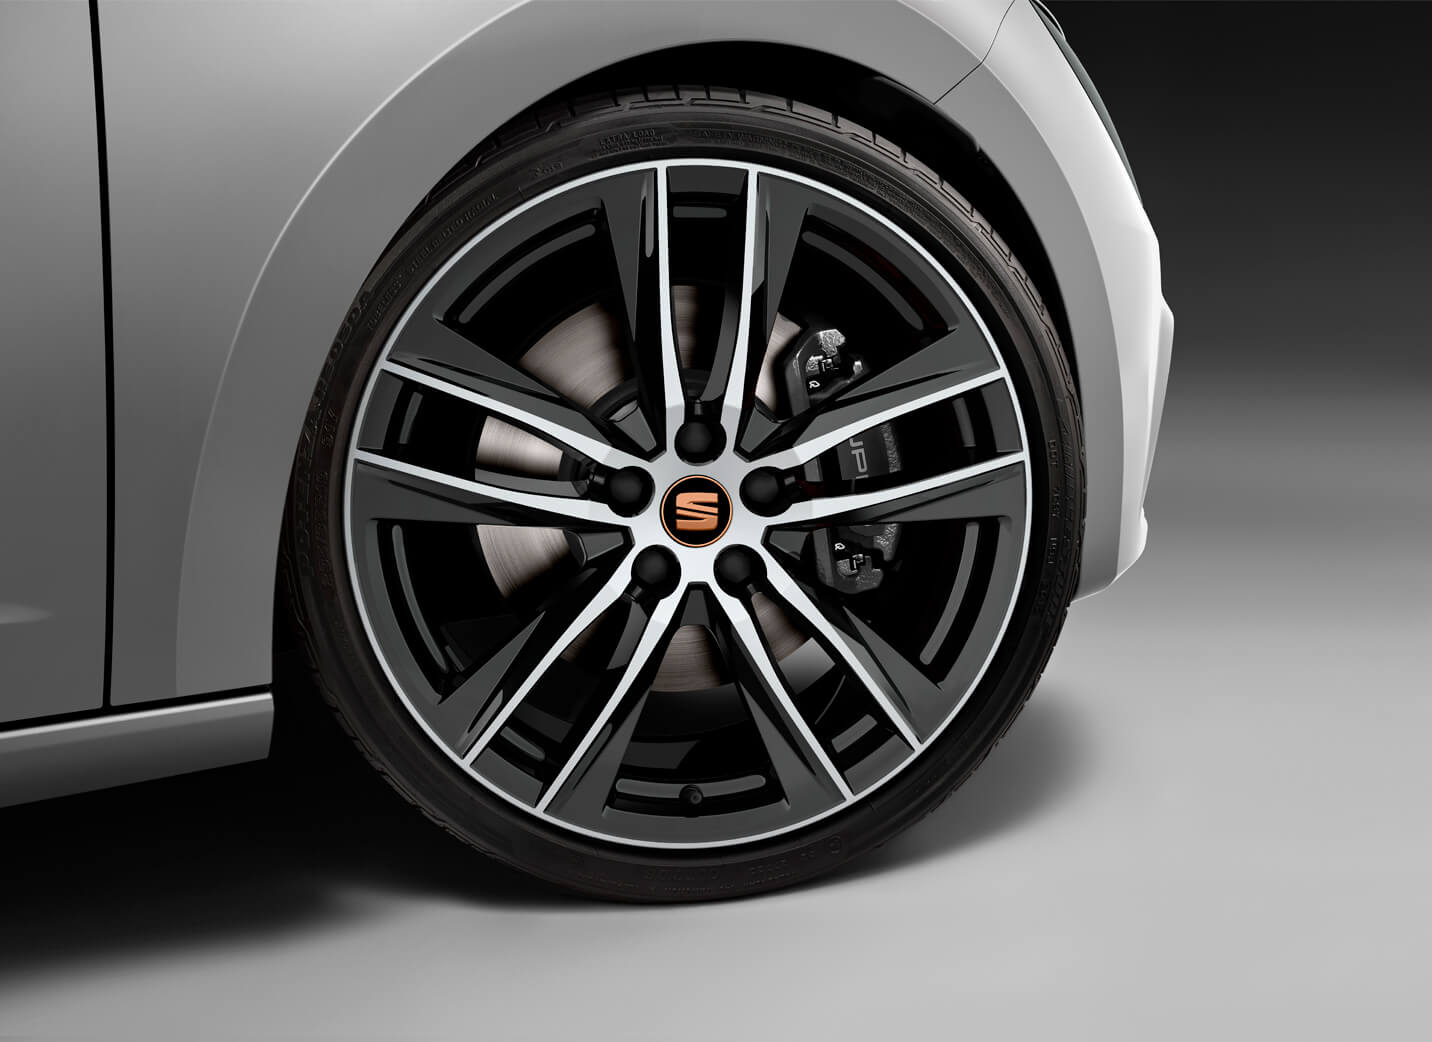 SEAT Leon CUPRA sports car front differential lock – SEAT CUPRA Technology